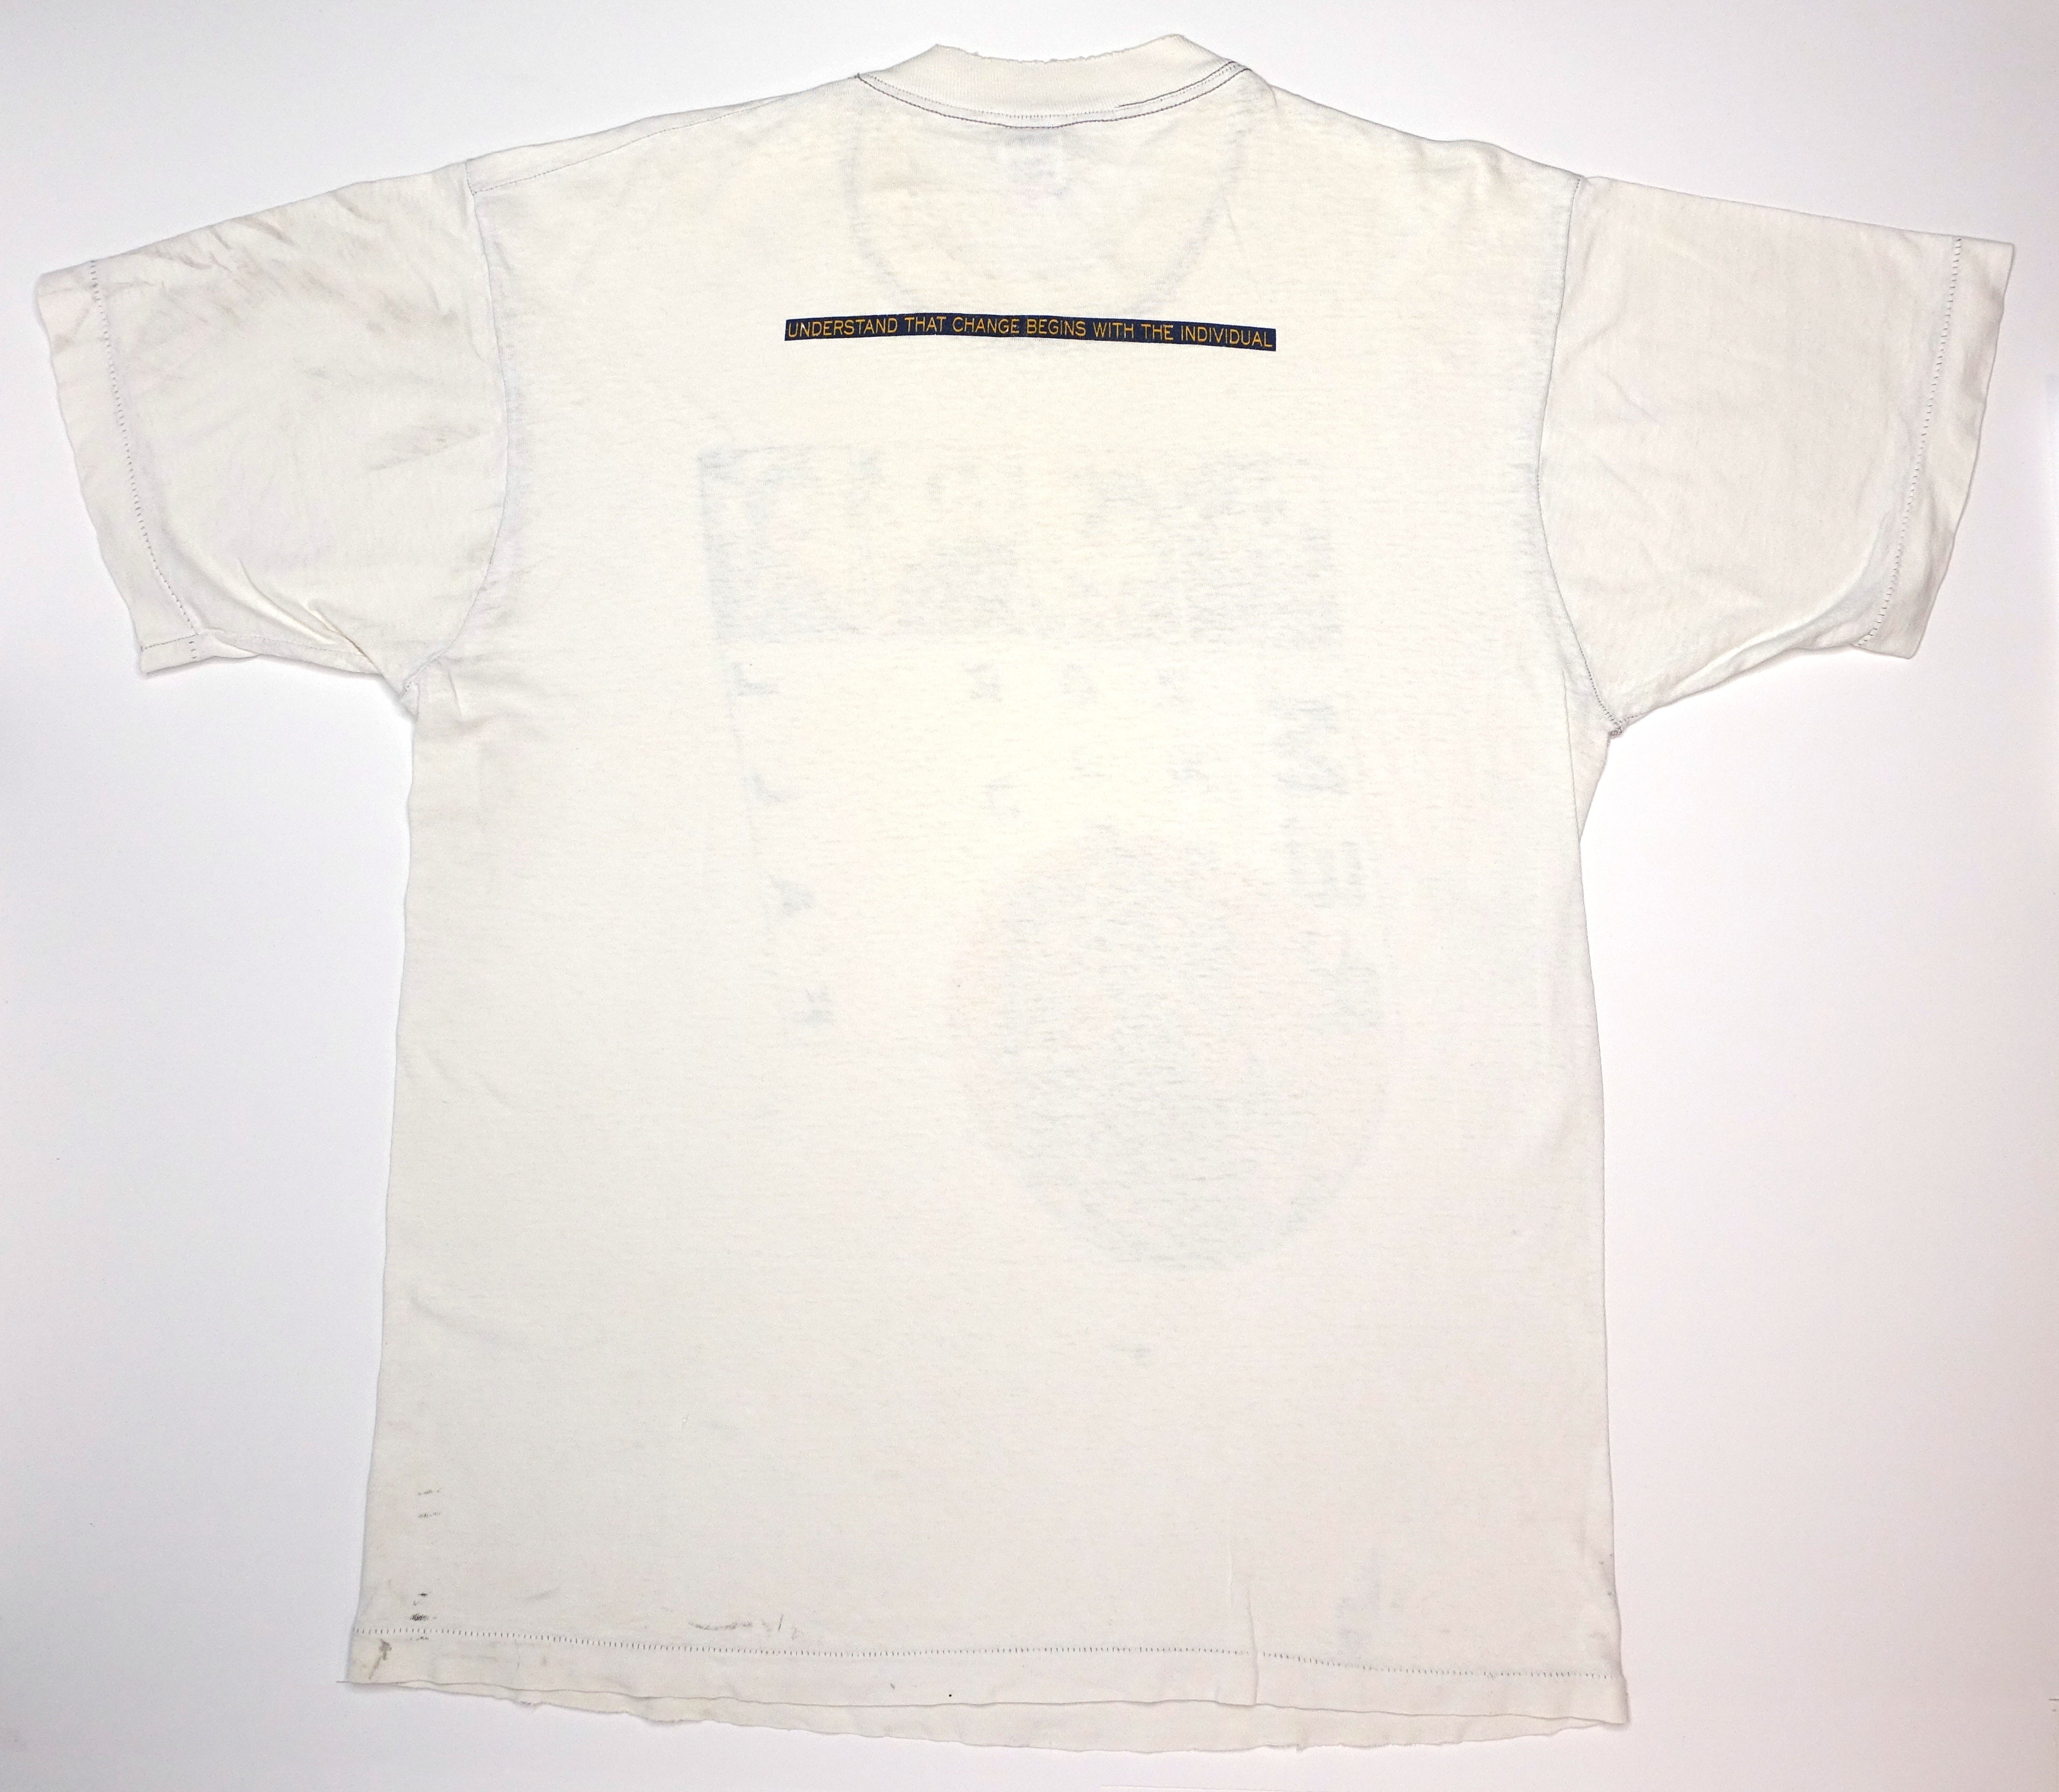 R.E.M. – Green World Fall Tour 1989 Shirt Size XL